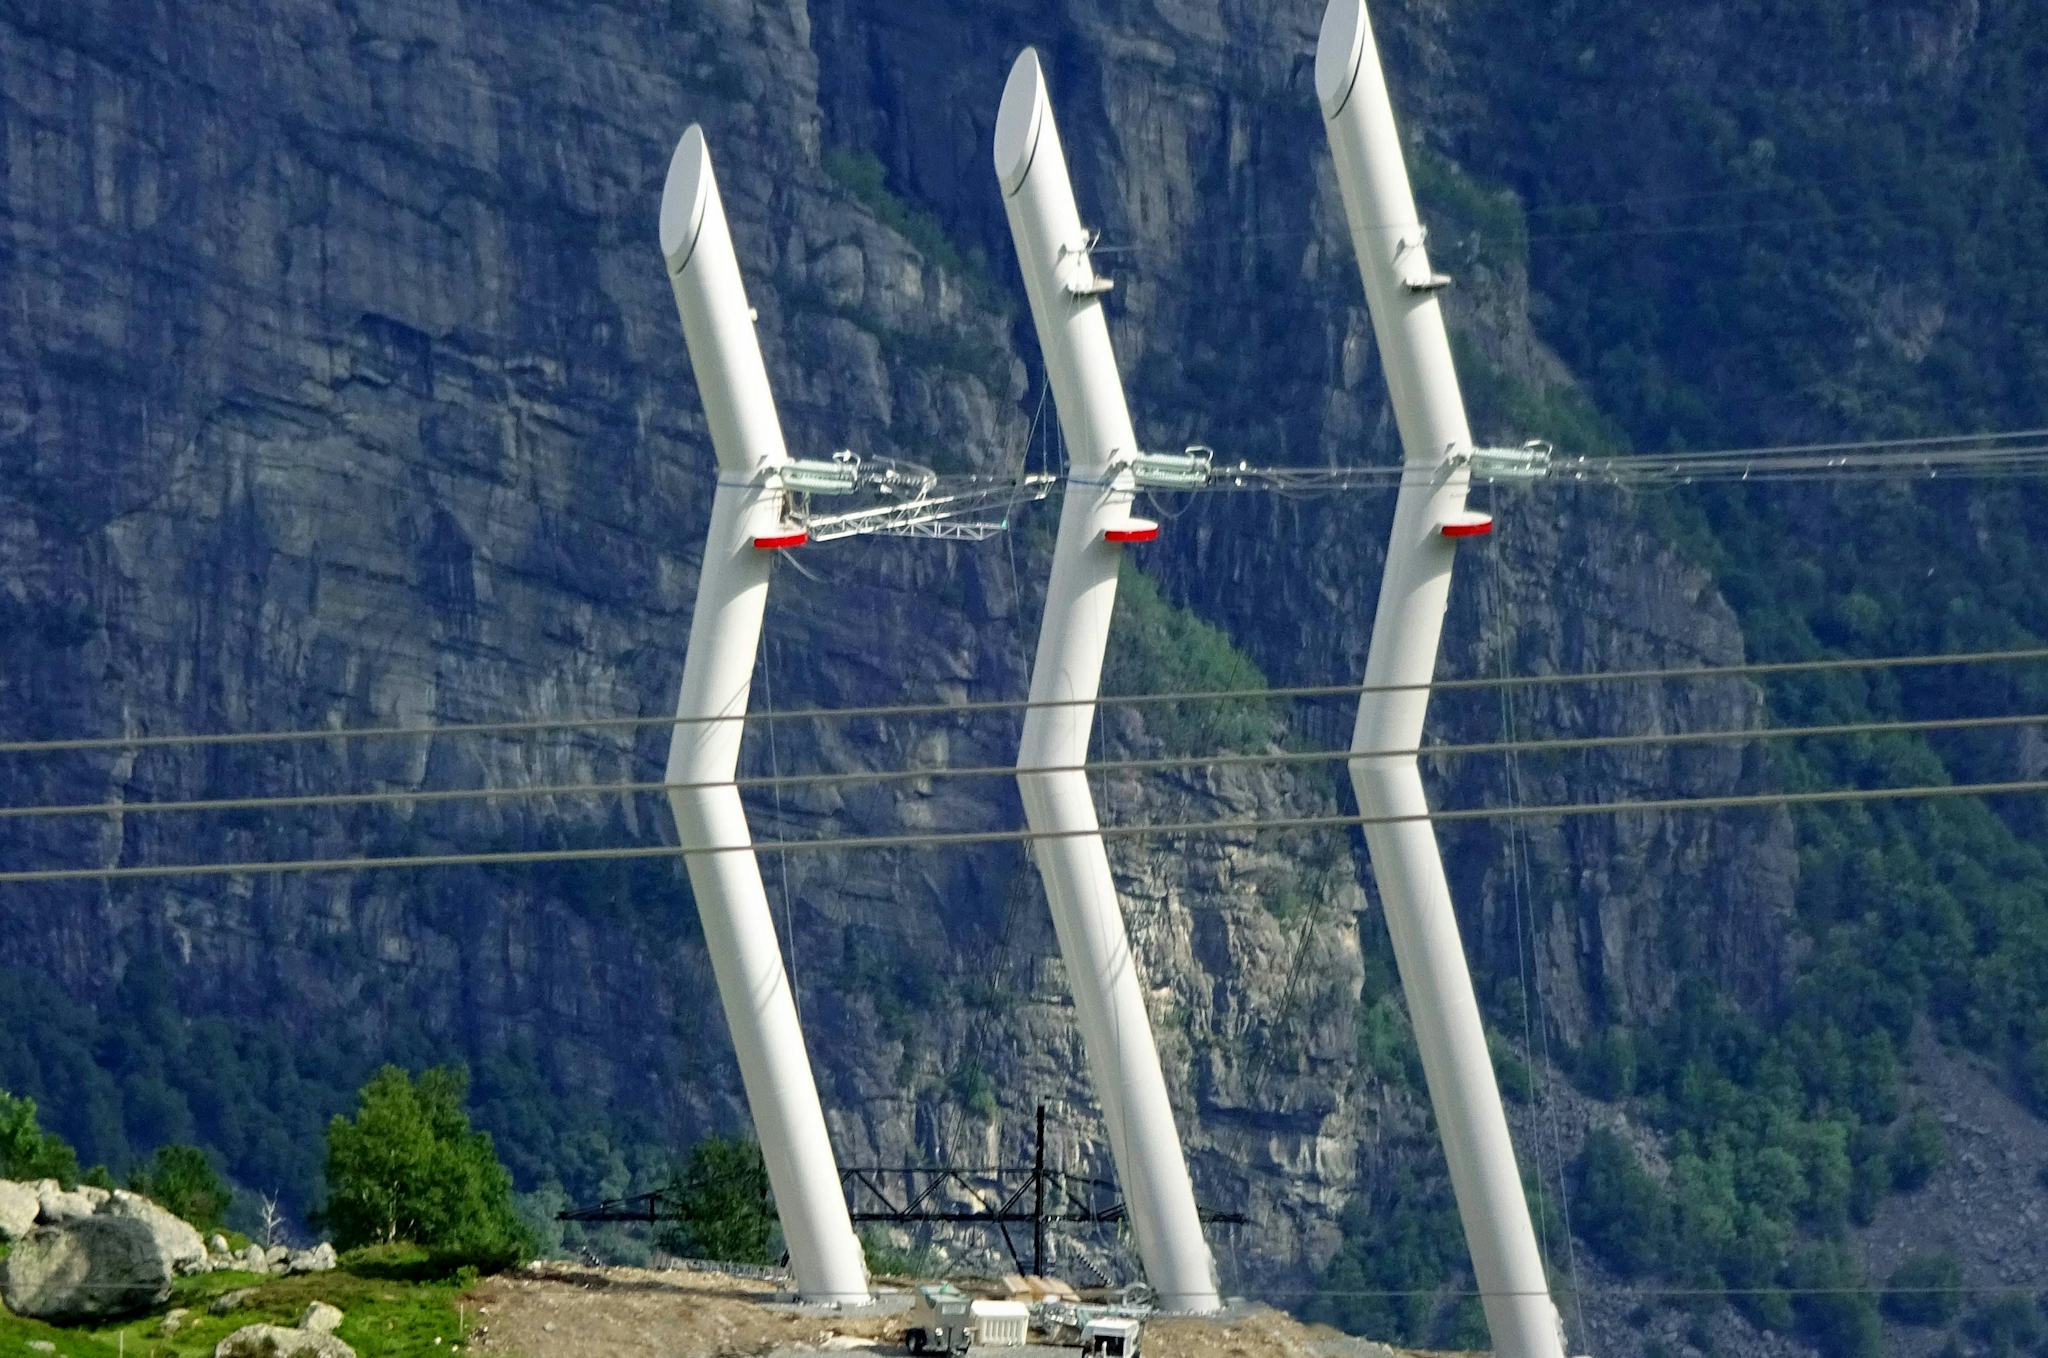 Three white transmission towers